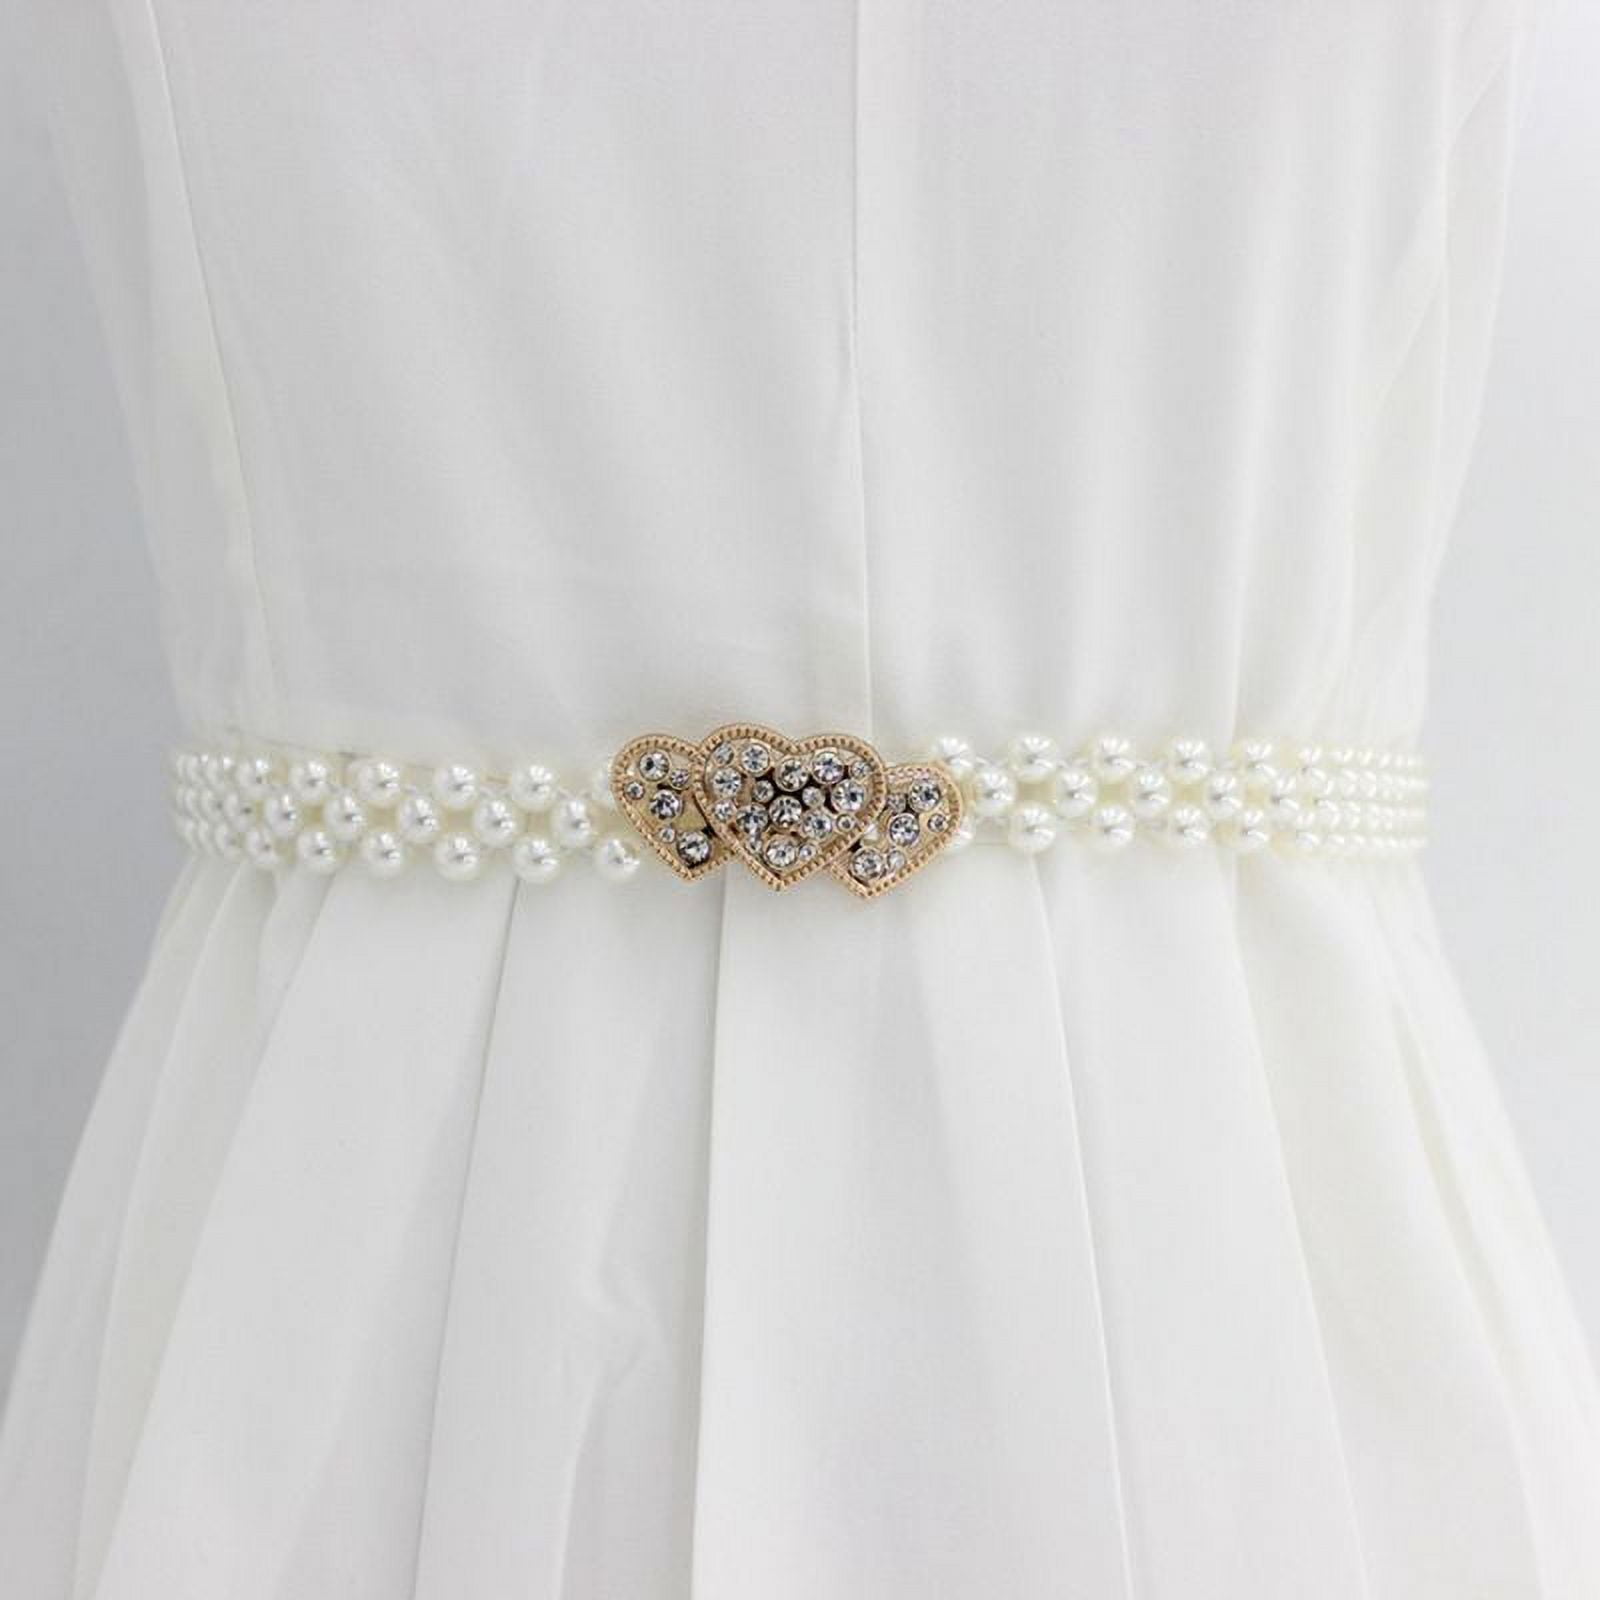 YouLaPan S432 Wedding Belt for Bride Dress Belt Jeweled Belts for Wedding  Waistband Pearl and Rhinestone Wedding Dress Belt - AliExpress